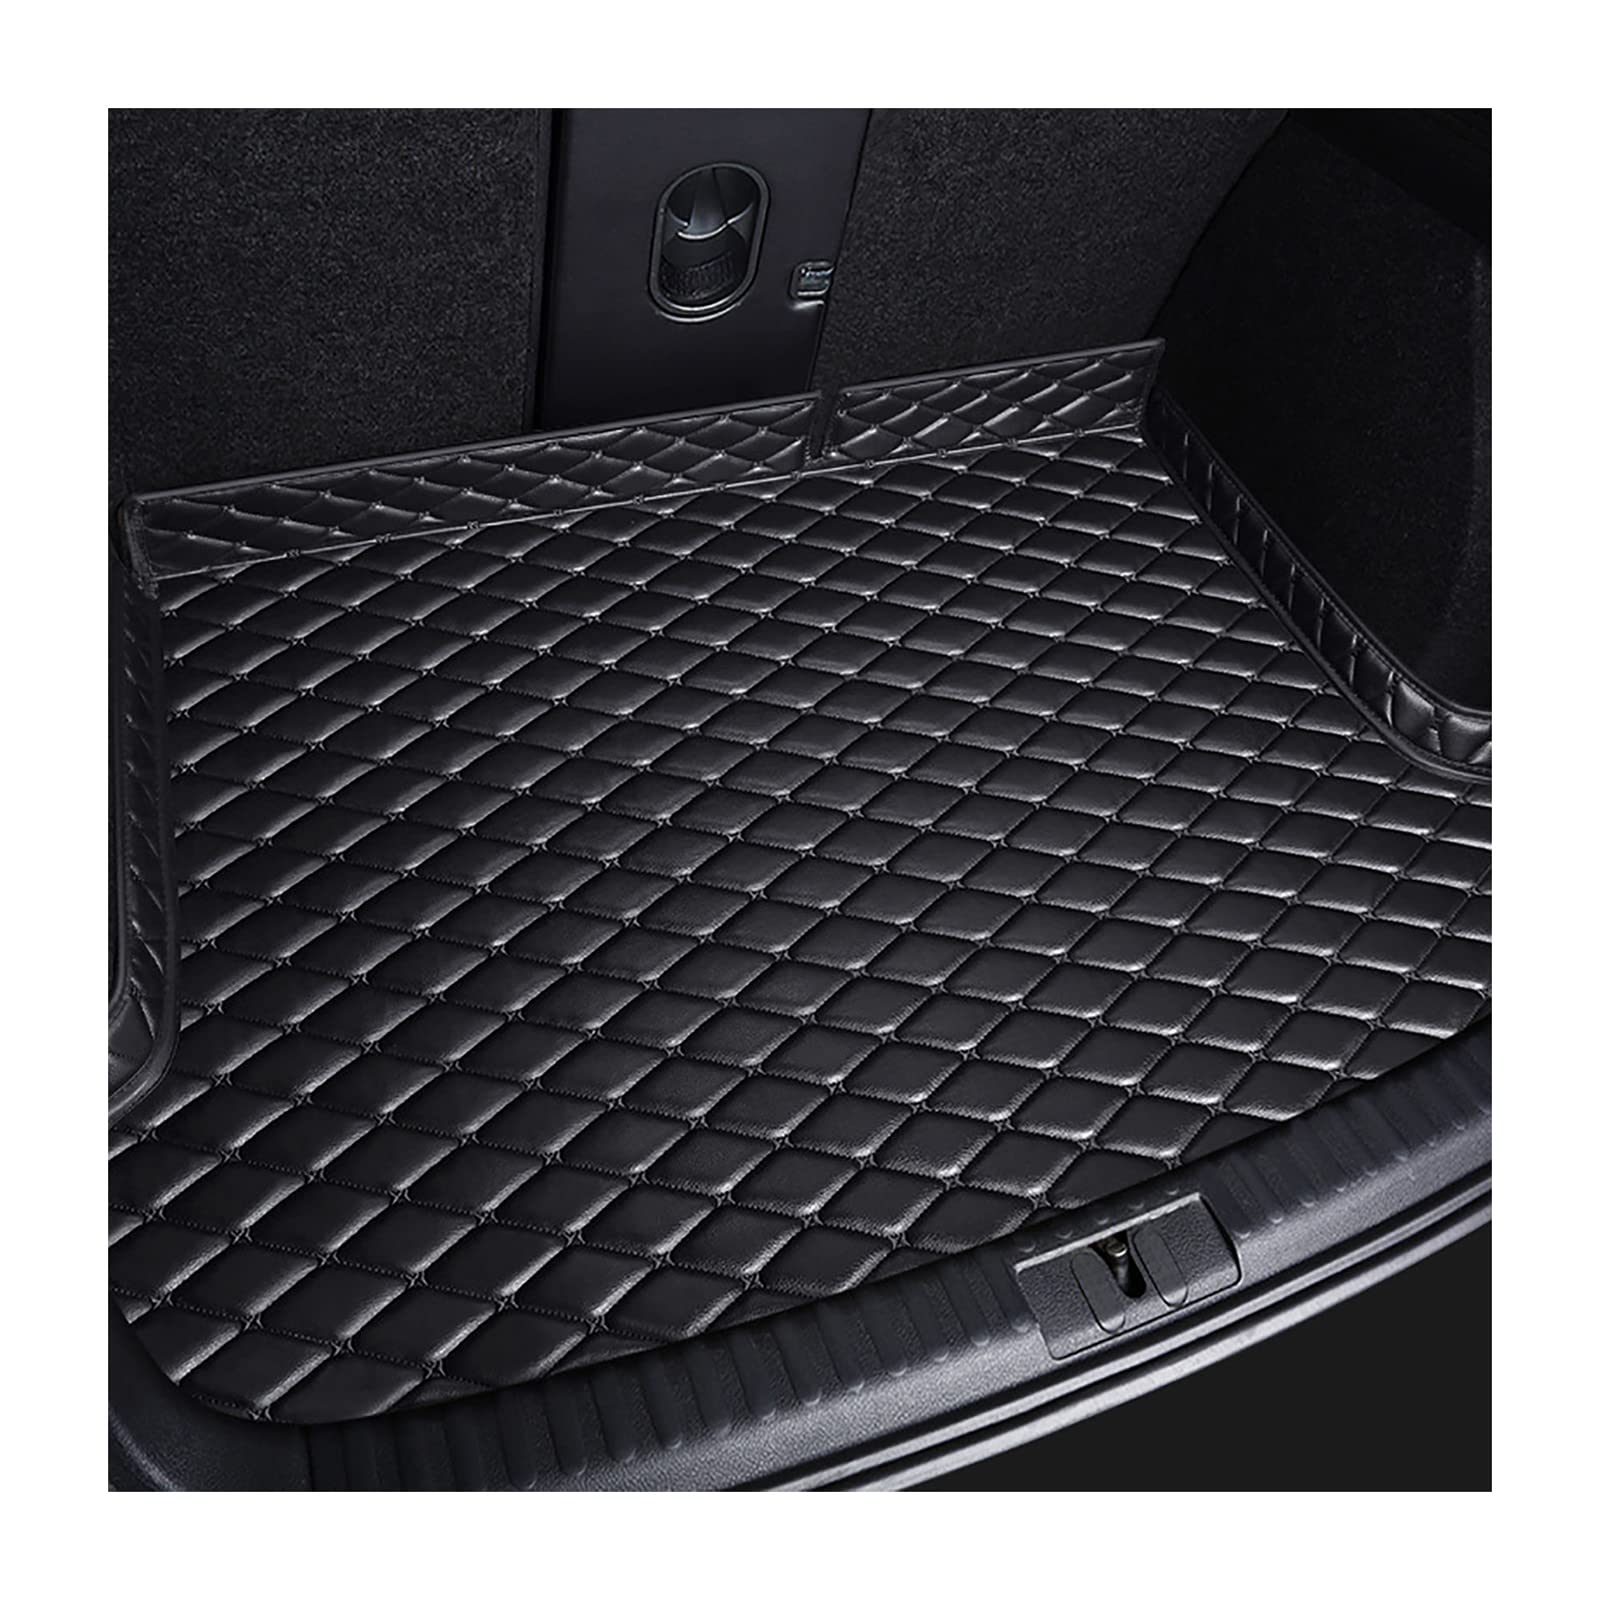 Car Boot Protection Mat mit Erhöhtem Rand, Kompatibel mit BMW 2 Series 2 door 2018+, Boot Protector Boot Mat Accessories,1-All Black von YPGHBHD